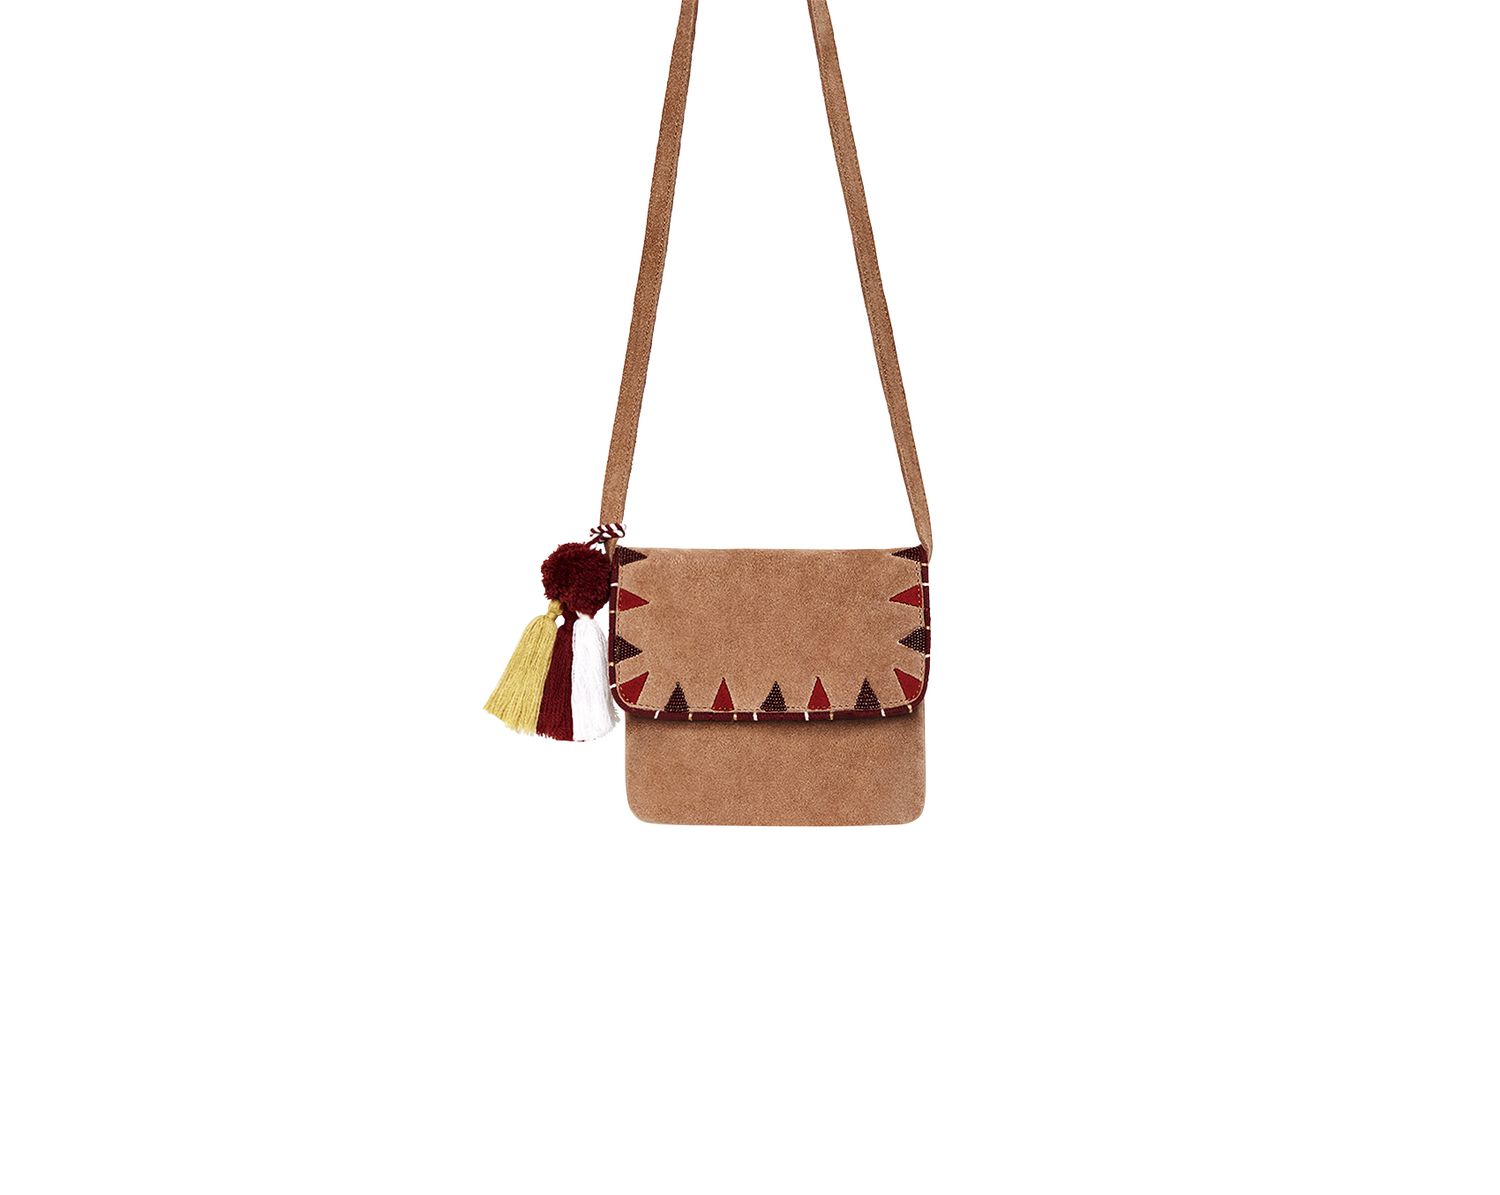 Zara Girl’s leather crossbody bag